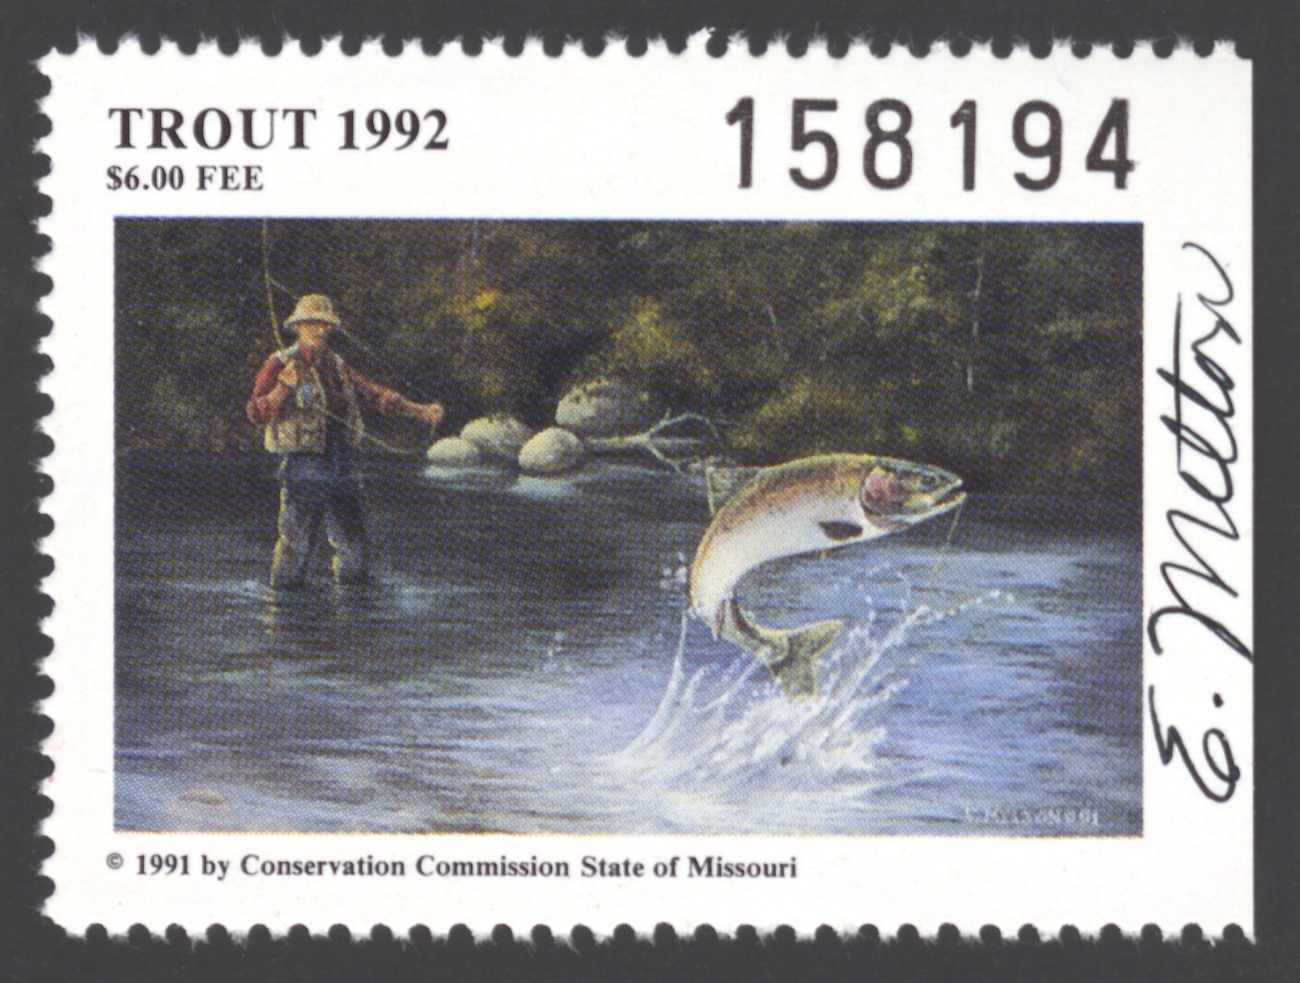 1992 Missouri Missouri Trout Stamp signed by Eileen Melton